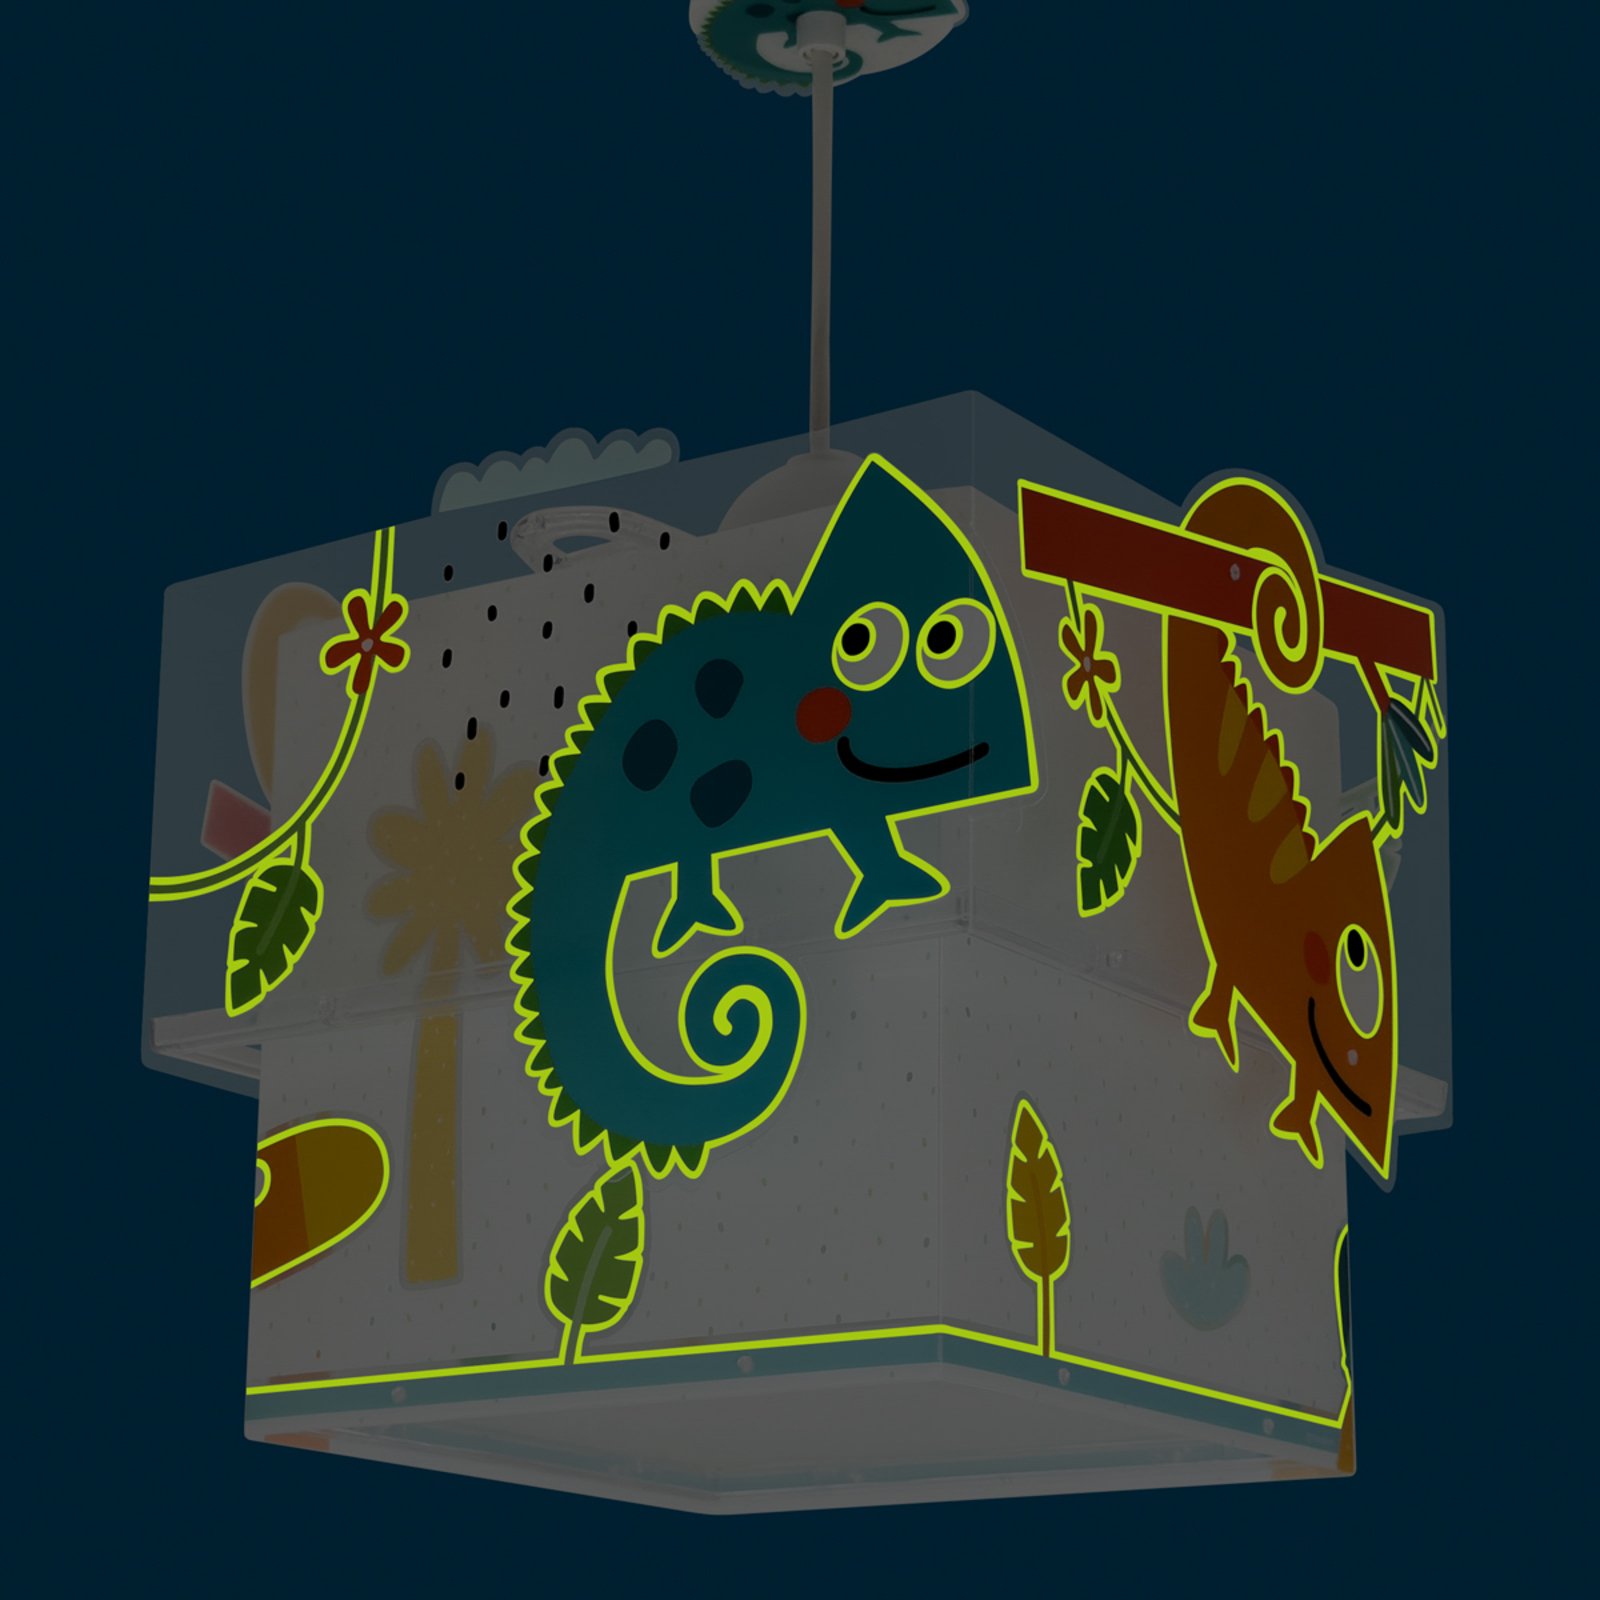 Dalber Happy Jungle kinderkamer-hanglamp